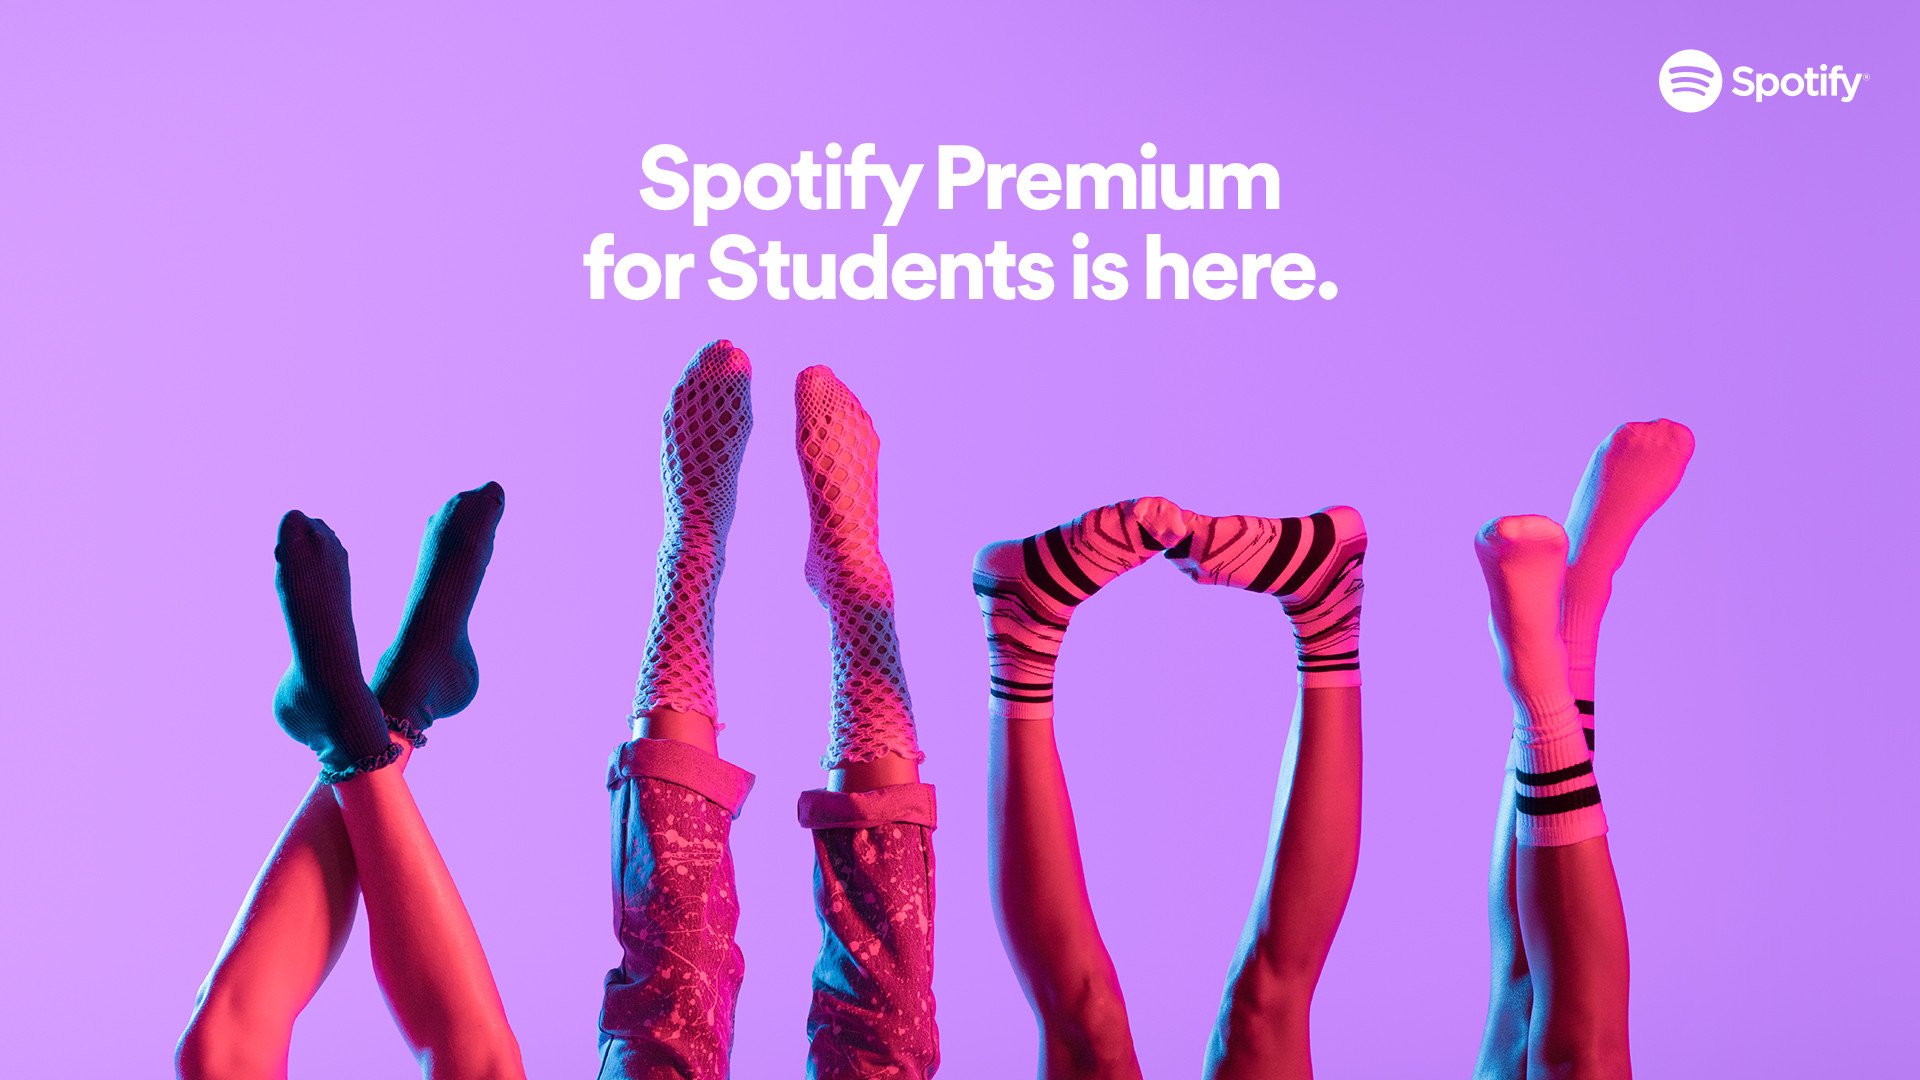 spotify ogrenci indirimi basladi aylik 6 99tl - Spotify Öğrenci İndirimi Başladı, Aylık 6,99TL